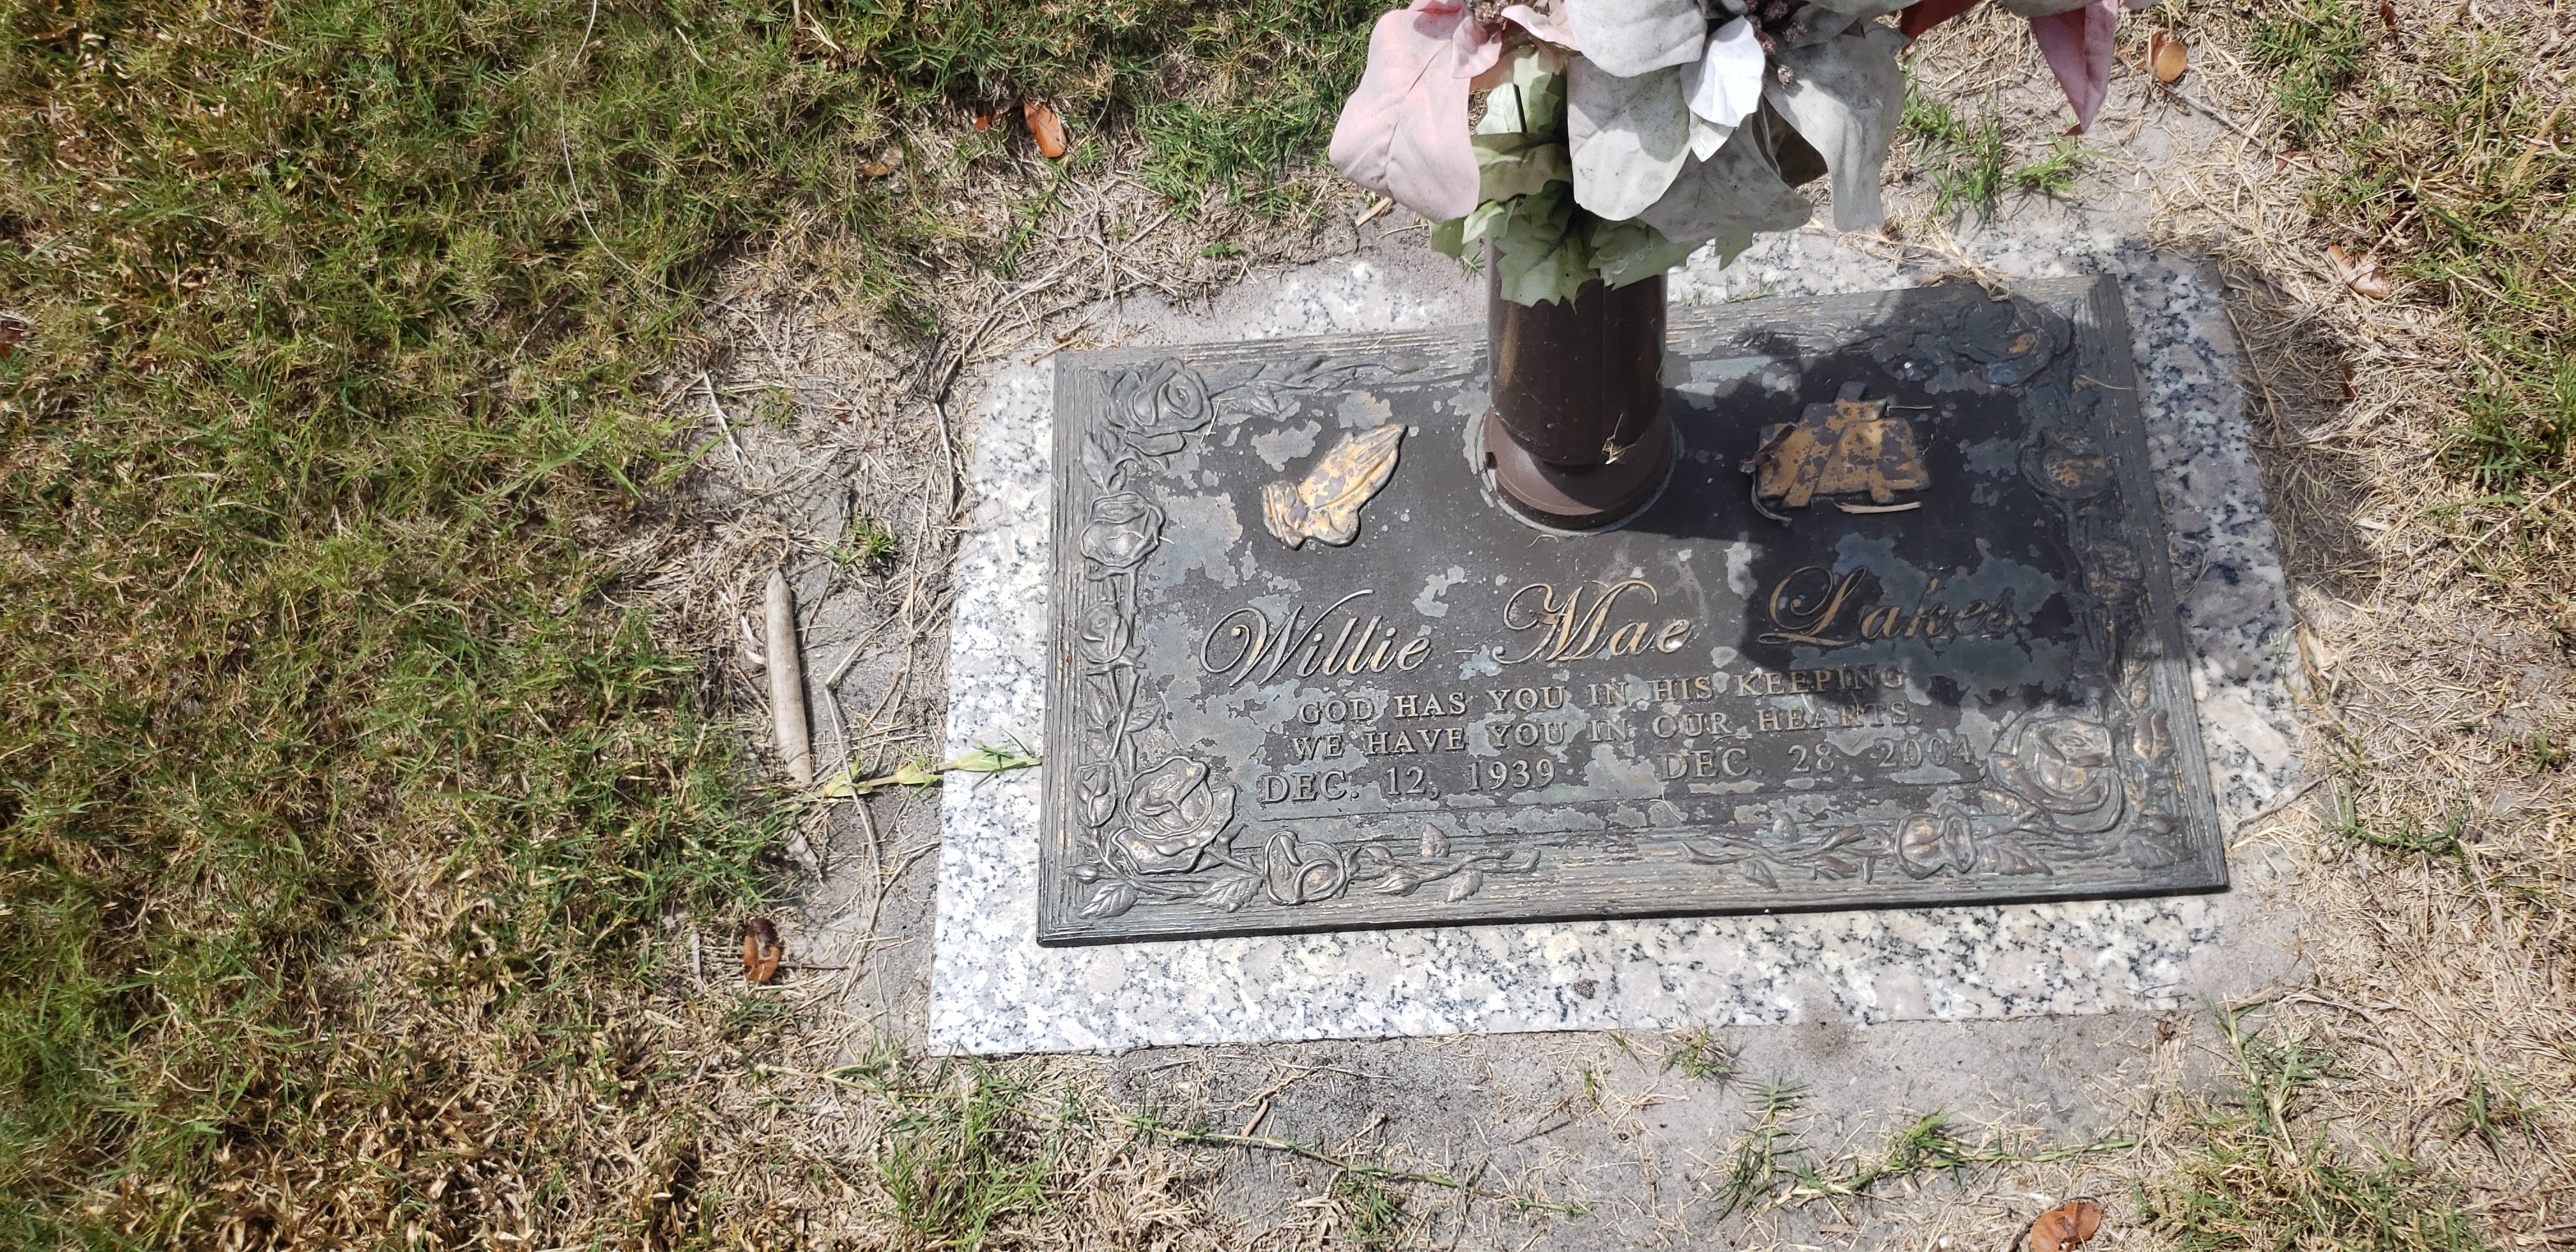 Willie Mae Lakes